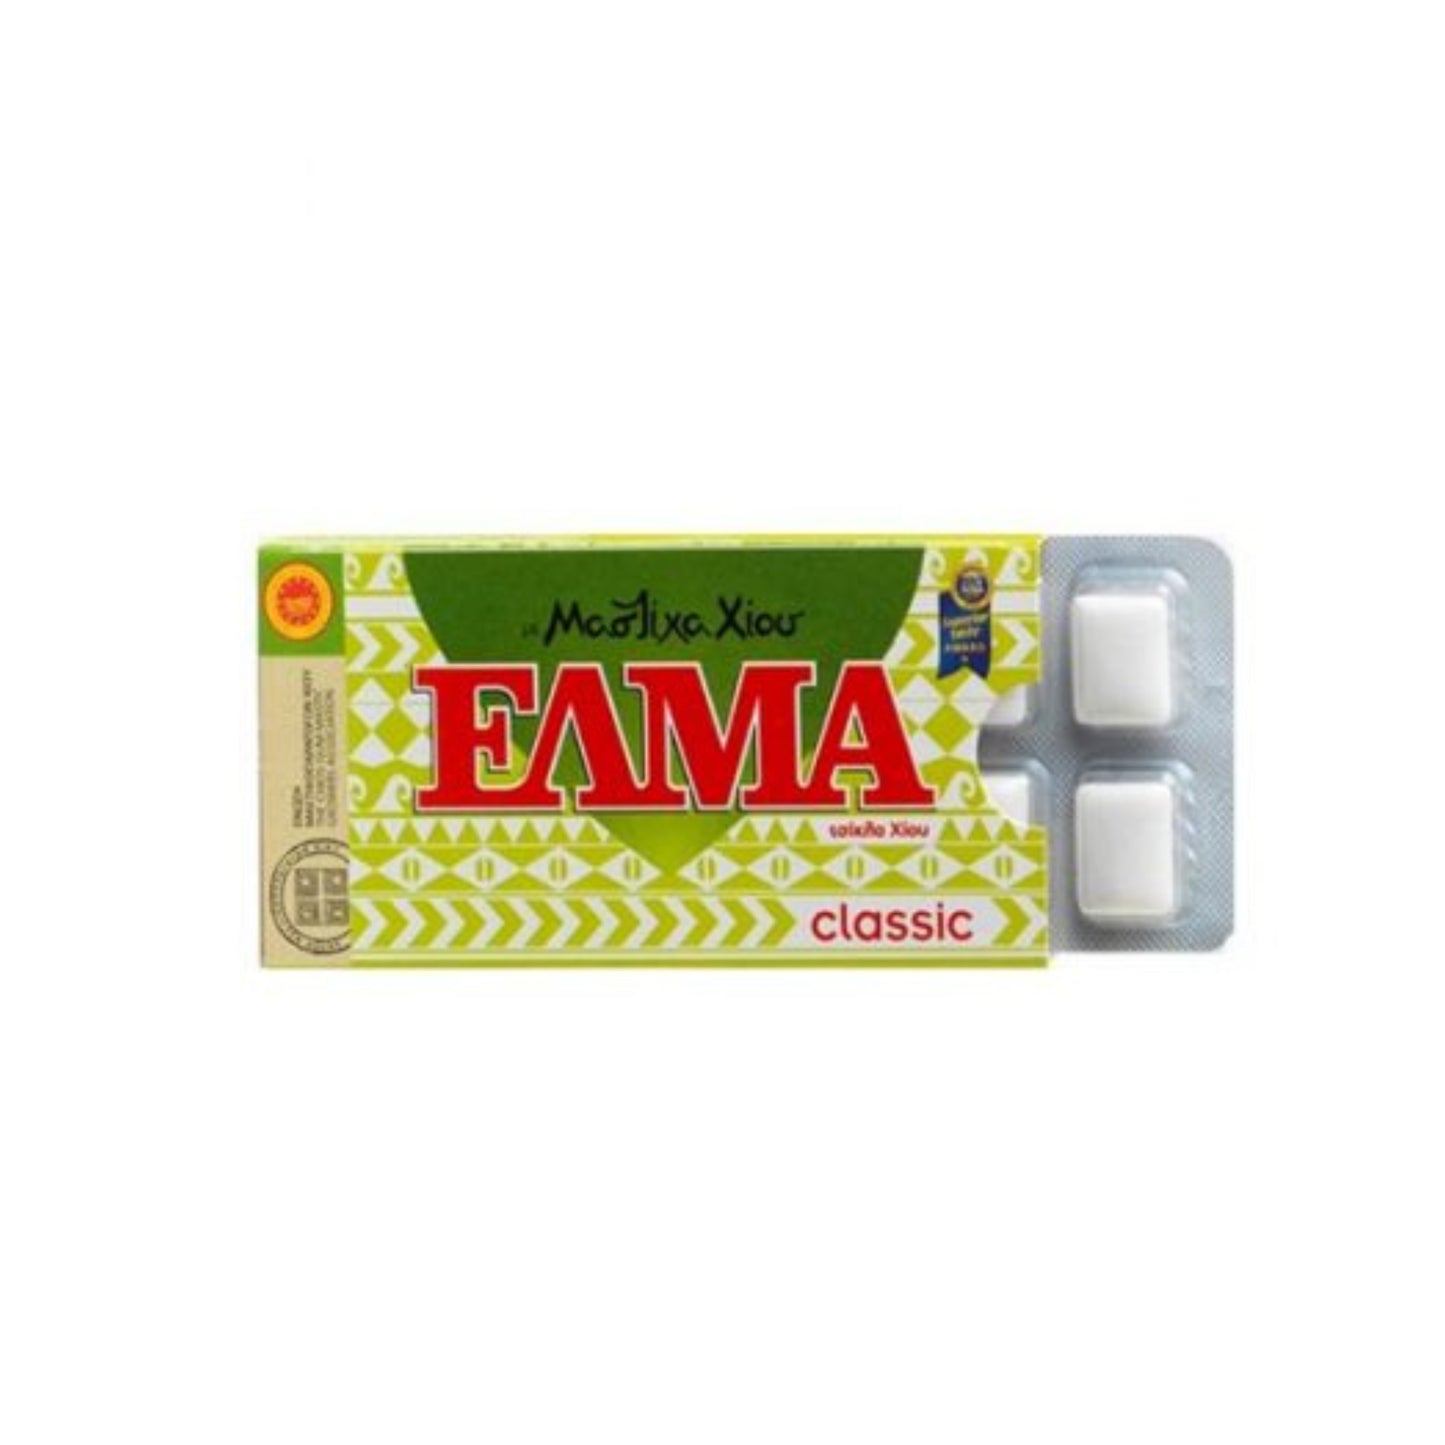 Elma Classic alla mastica - 20x13g